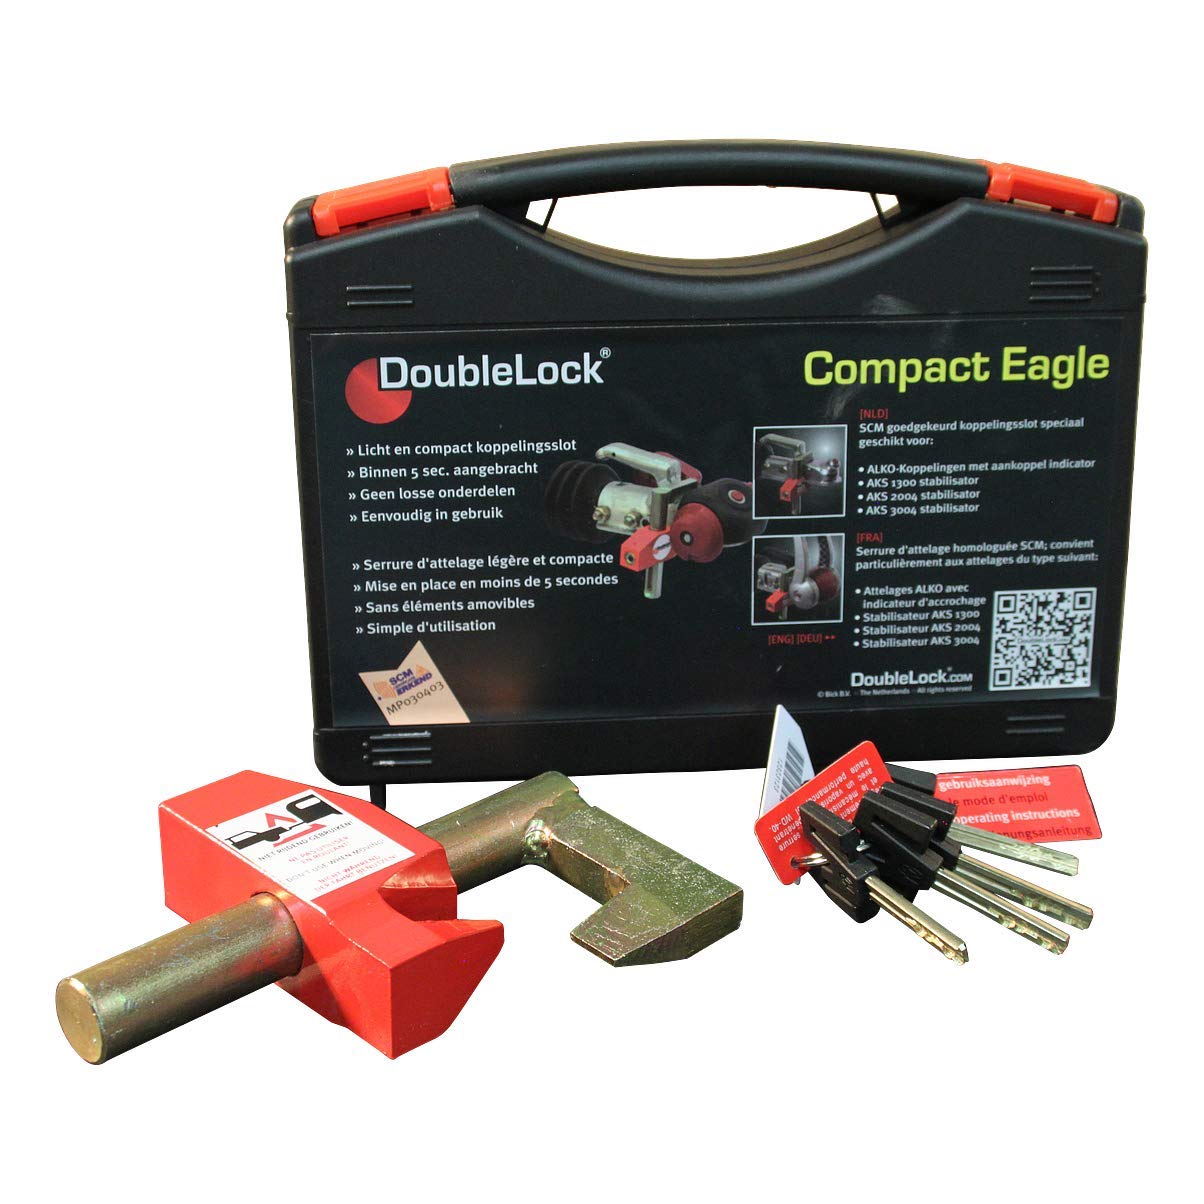 Compact Eagle SCM (AL-KO) im Koffer verpackt von DoubleLock